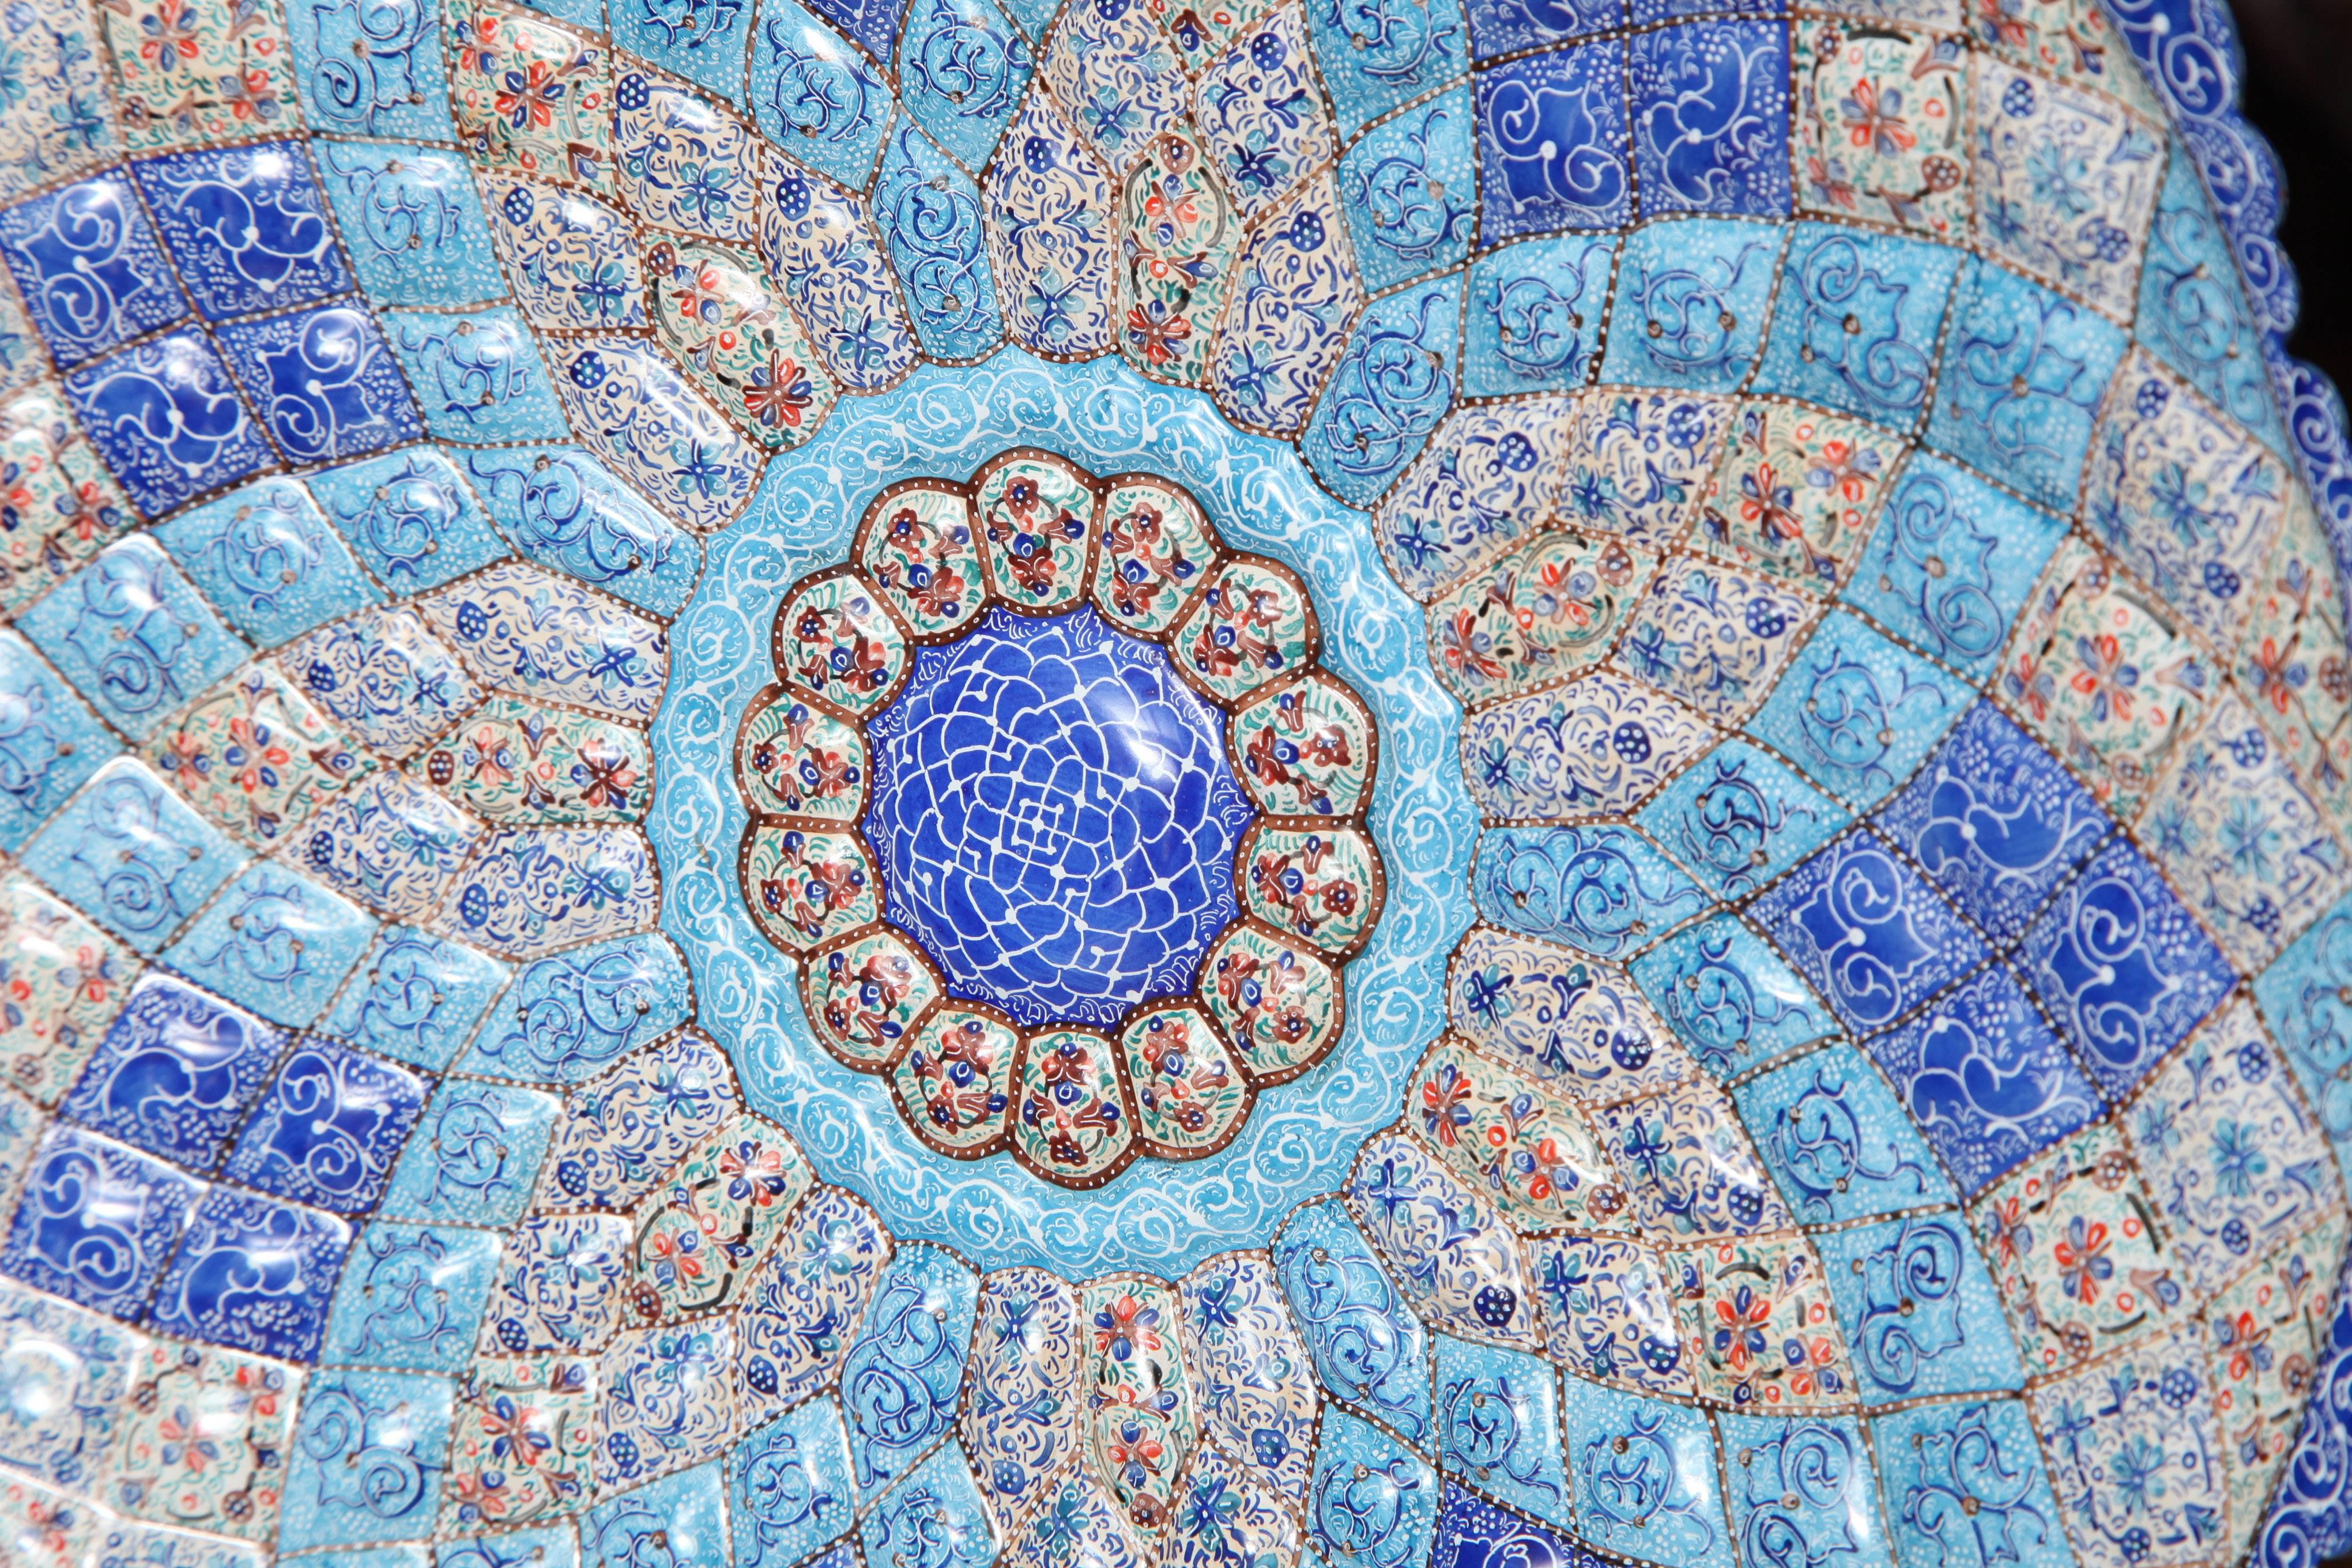 Enameled Blue Iranian Minakari Plates, Vitreous Enamel on Copper